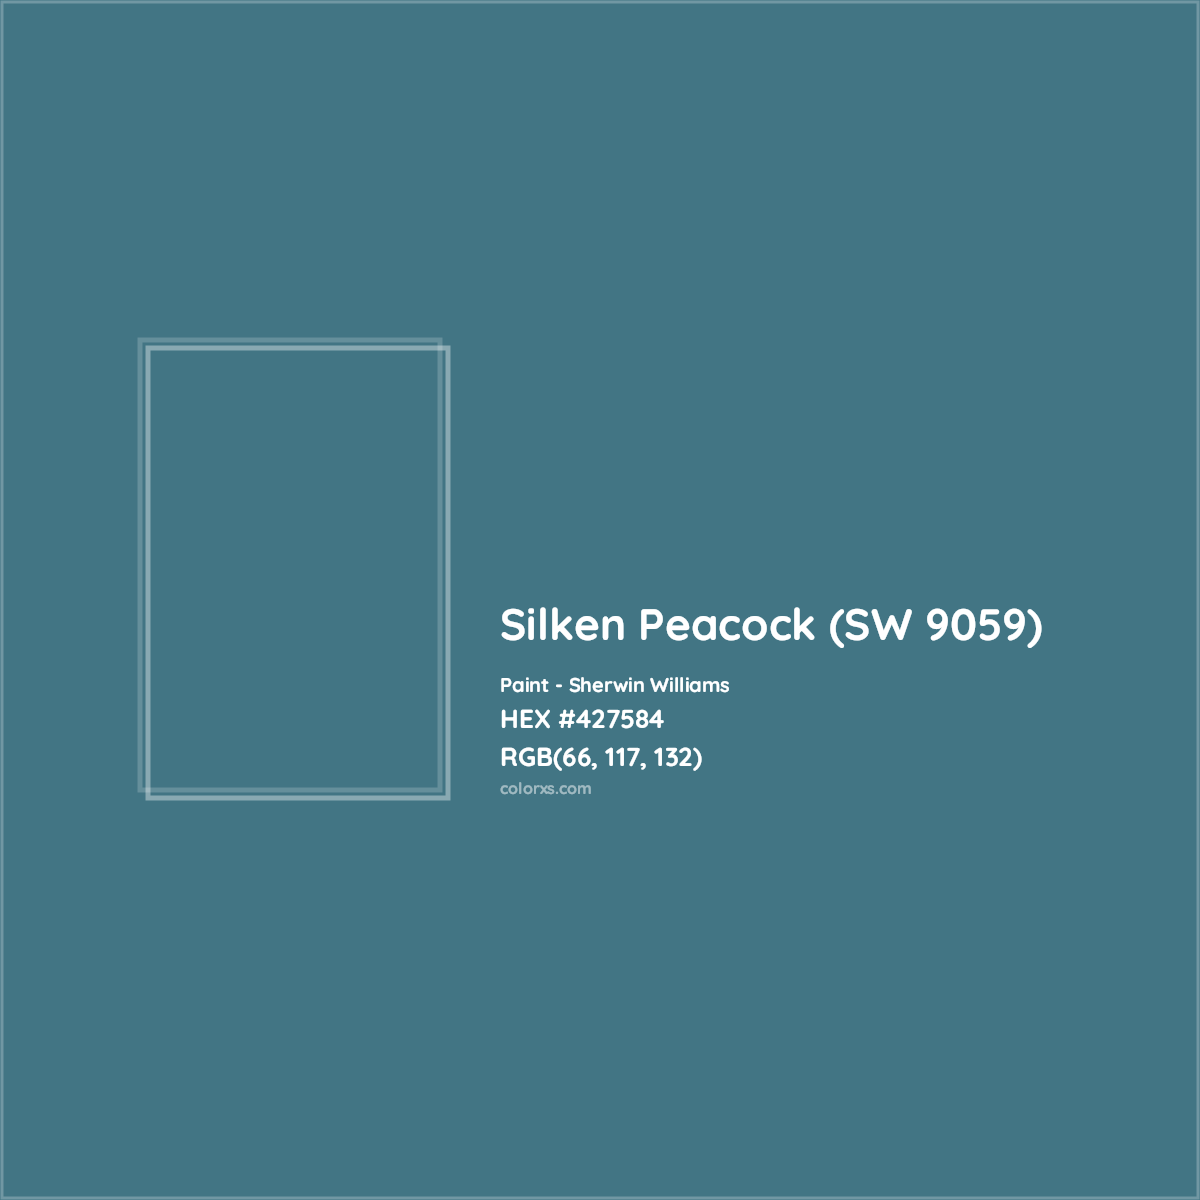 HEX #427584 Silken Peacock (SW 9059) Paint Sherwin Williams - Color Code